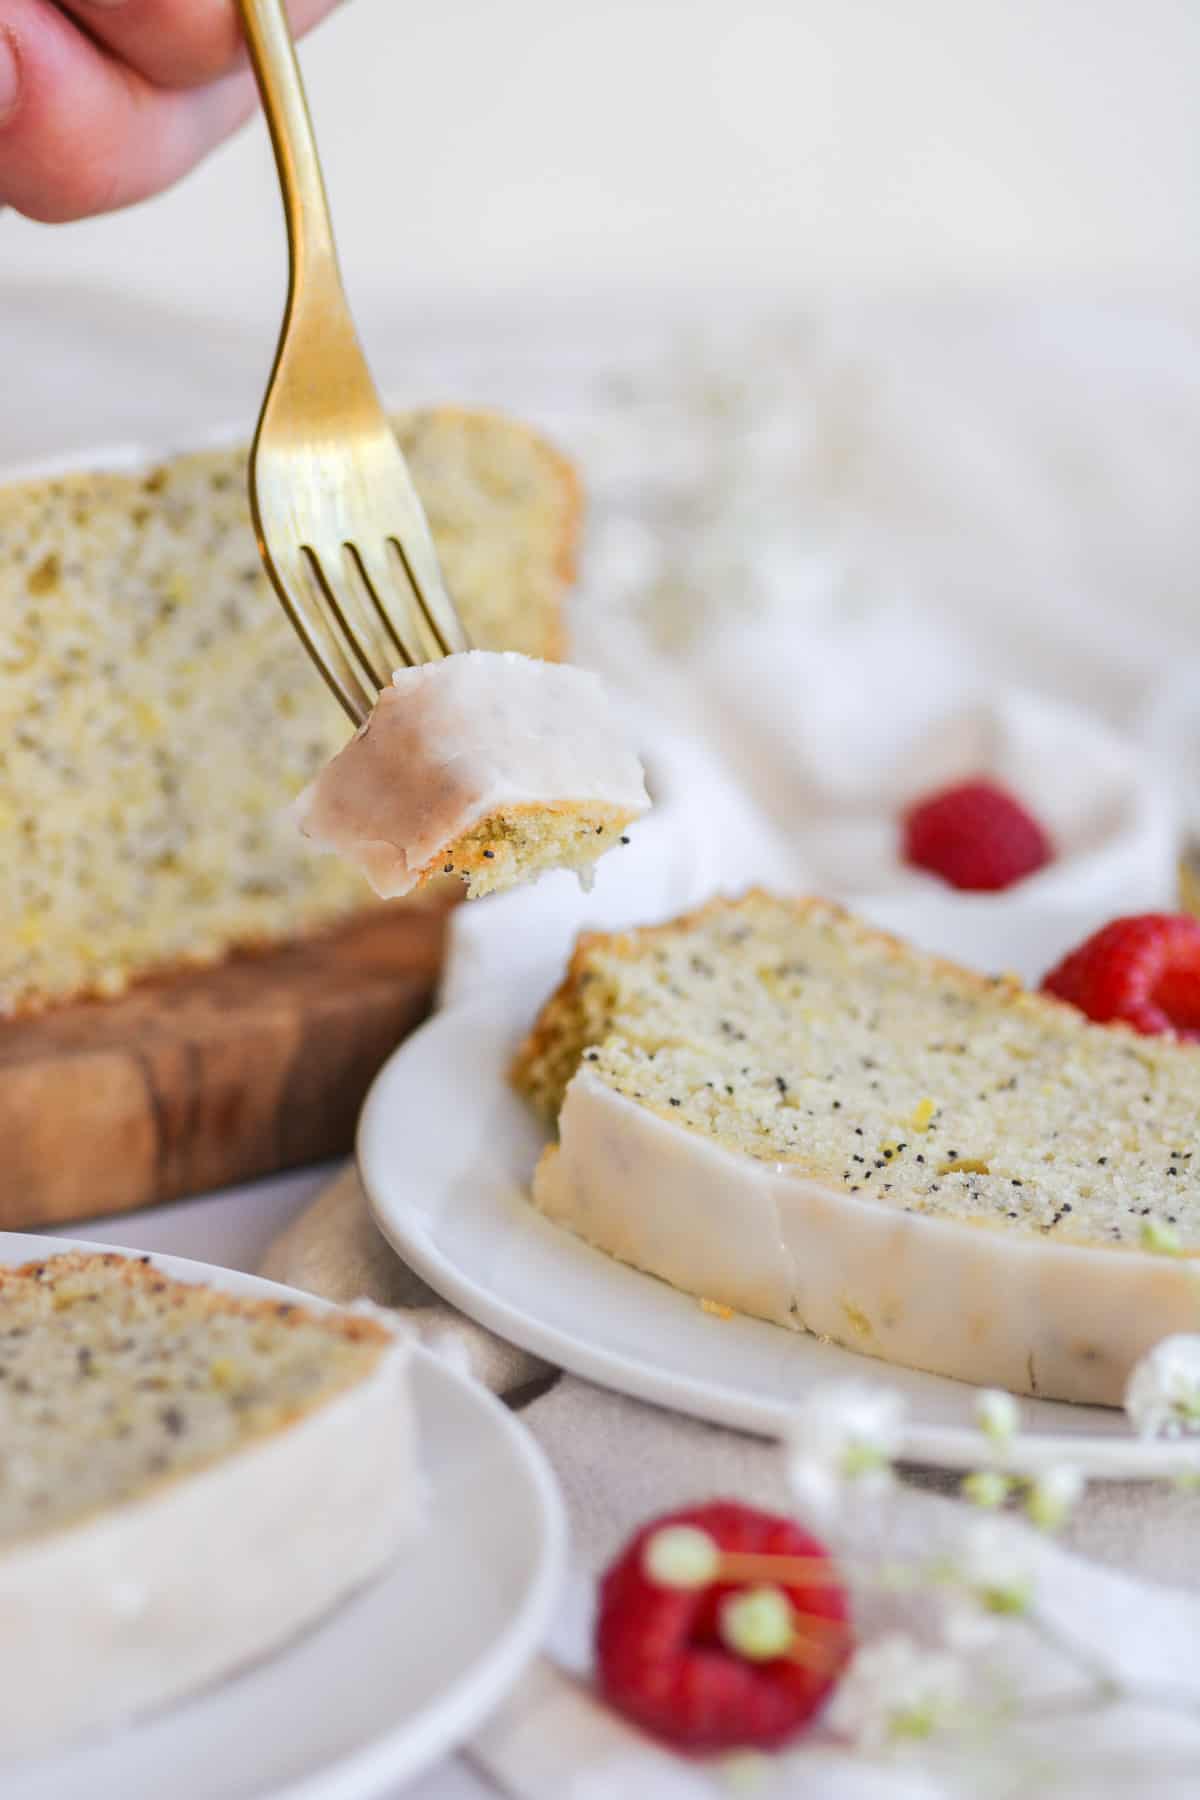 A bite of vegan lemon poppyseed loaf cake on a gold fork